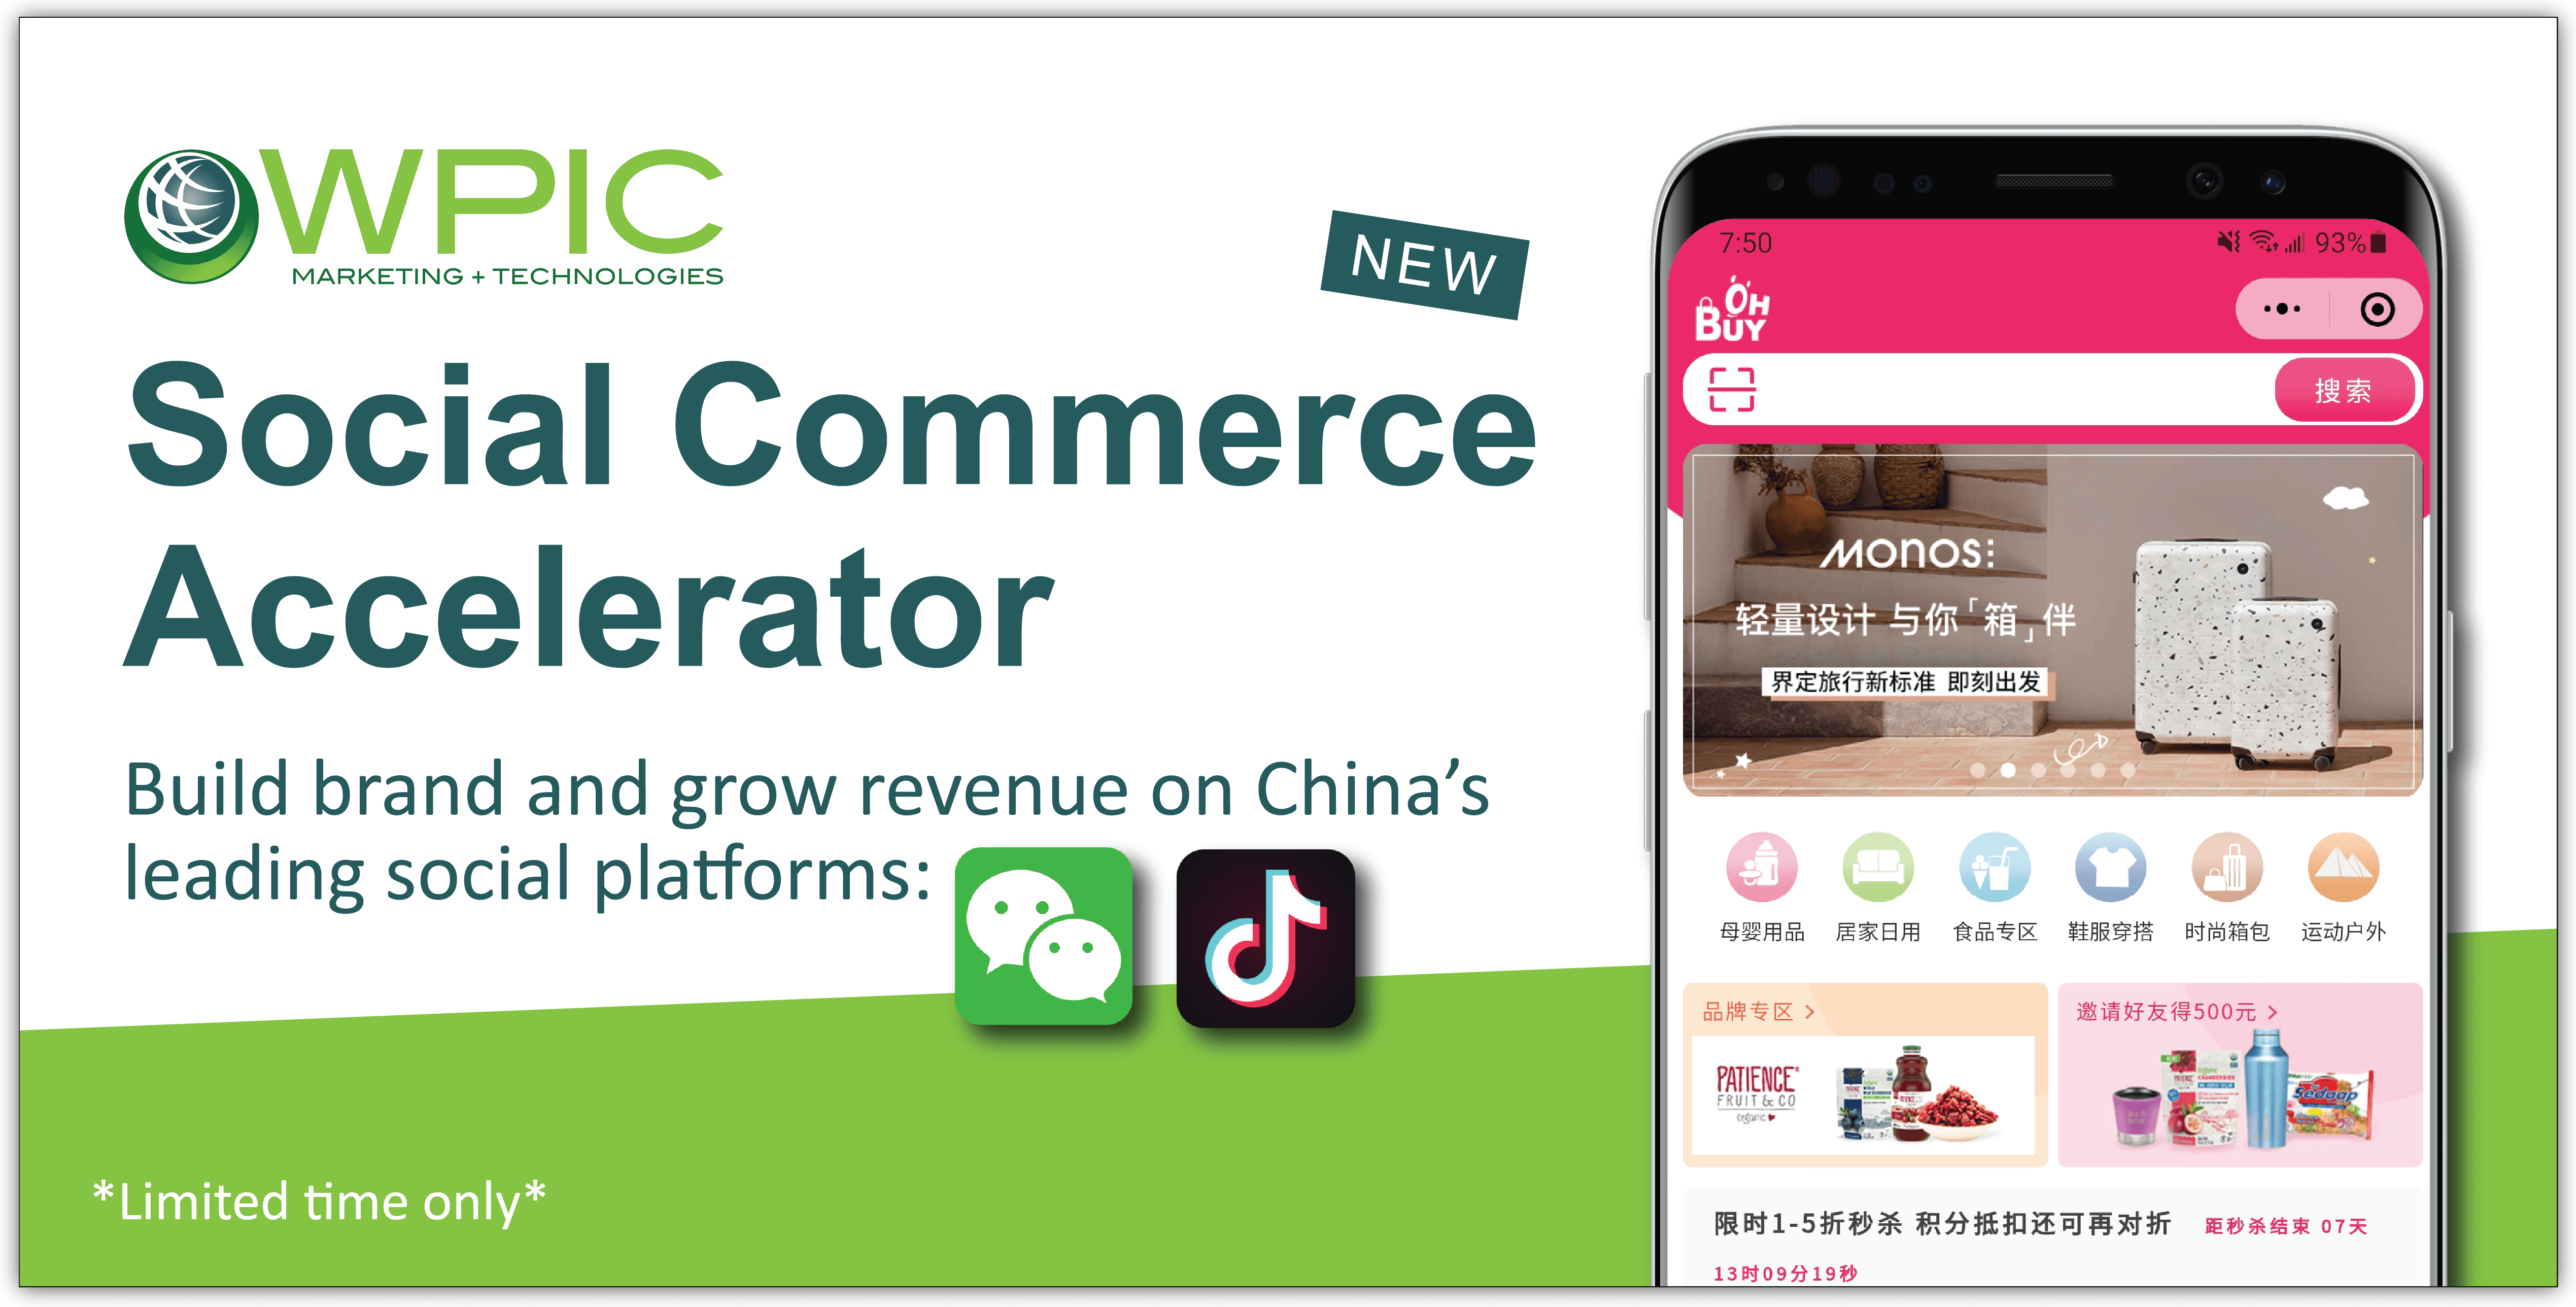 China social commerce accelerator